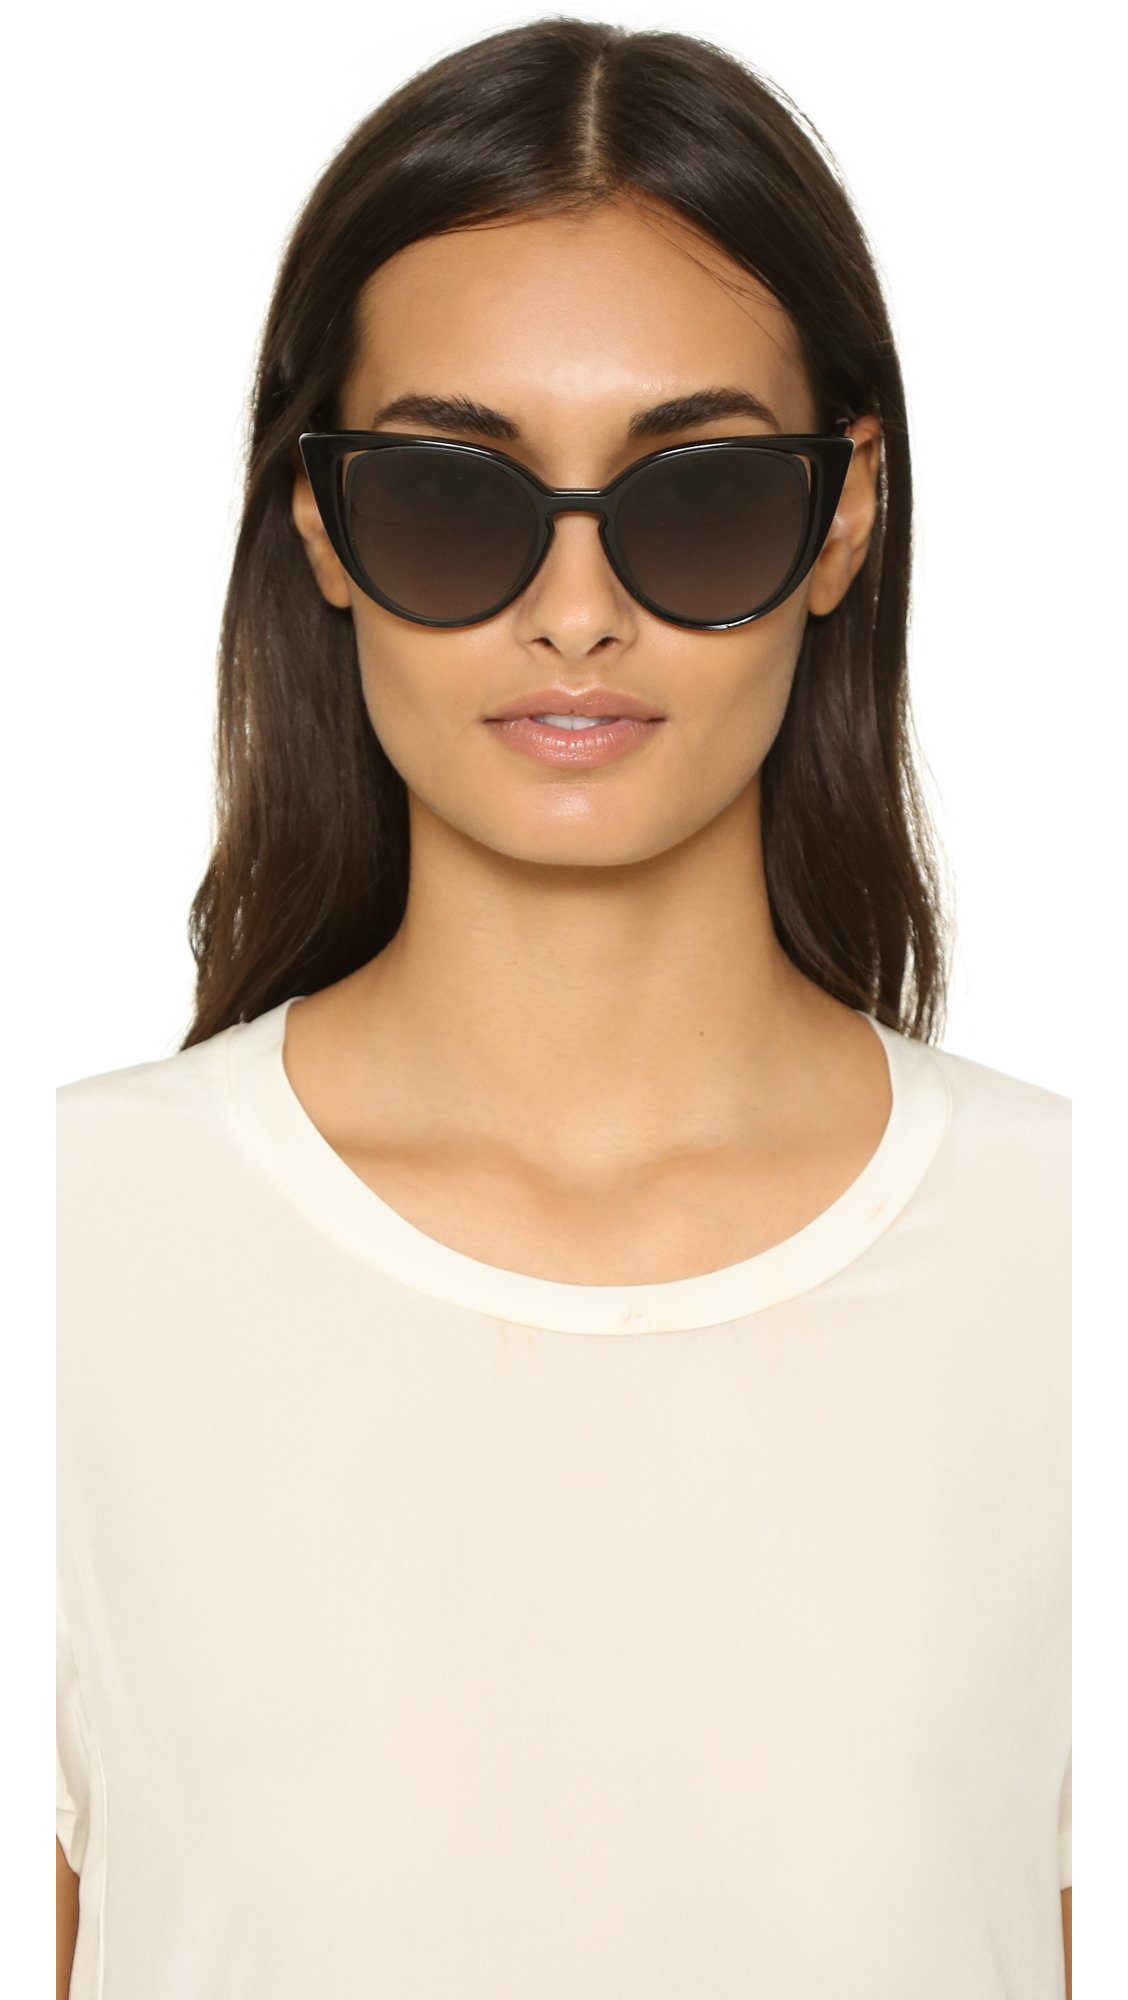 Fendi Women's Cat Eye Sunglasses